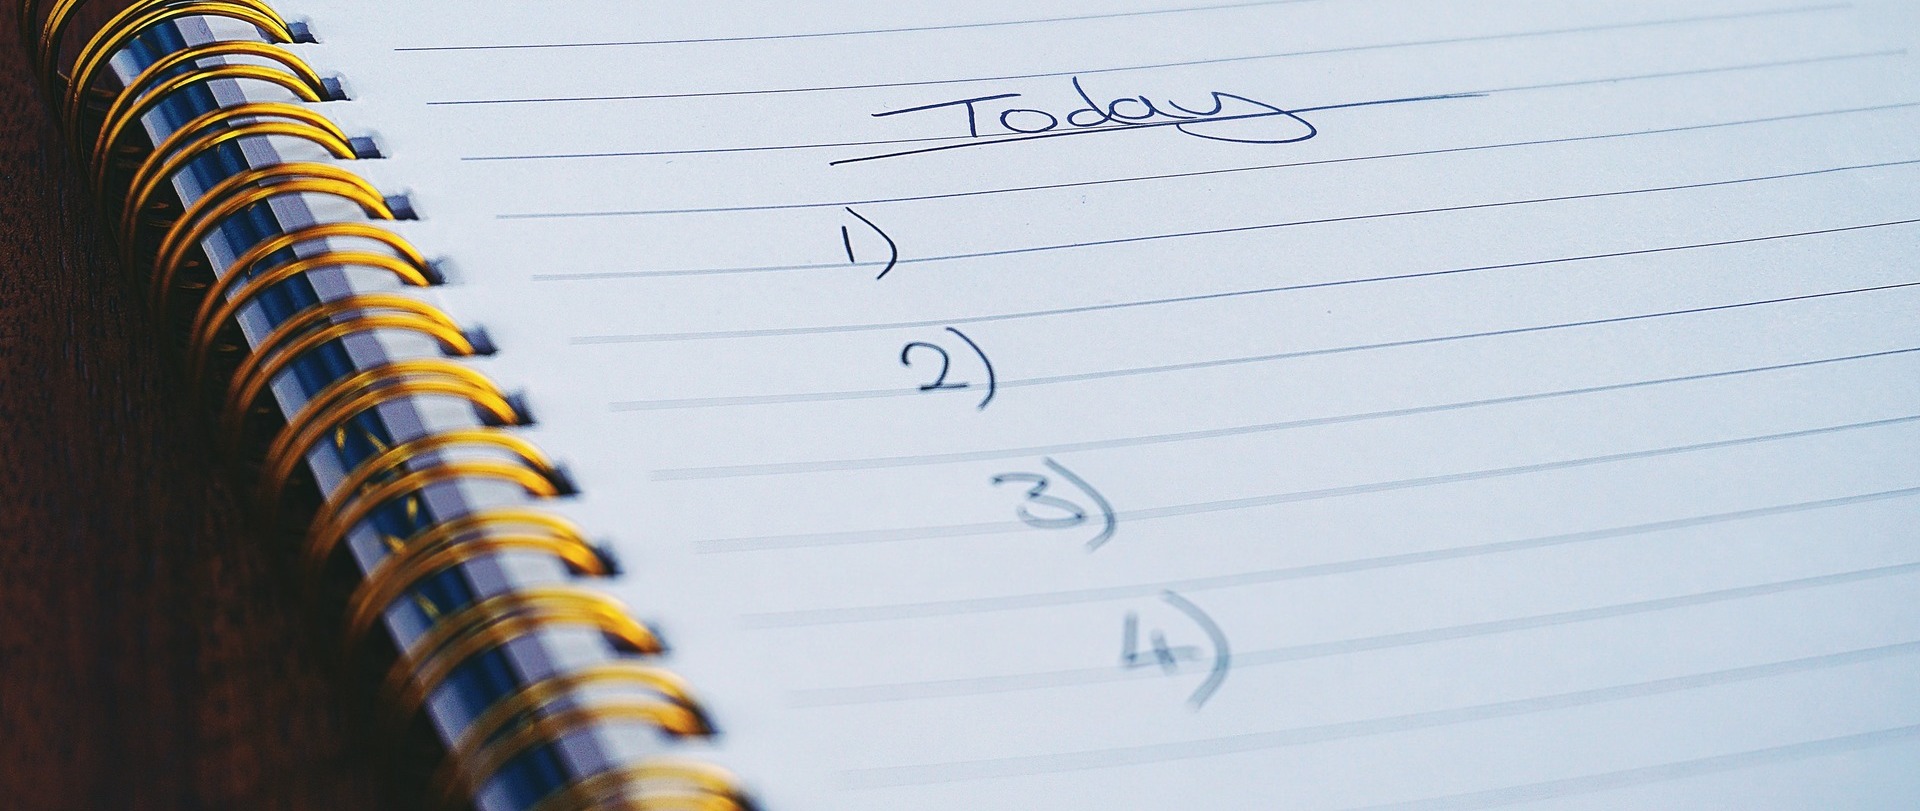 Daily plan written in a notebook